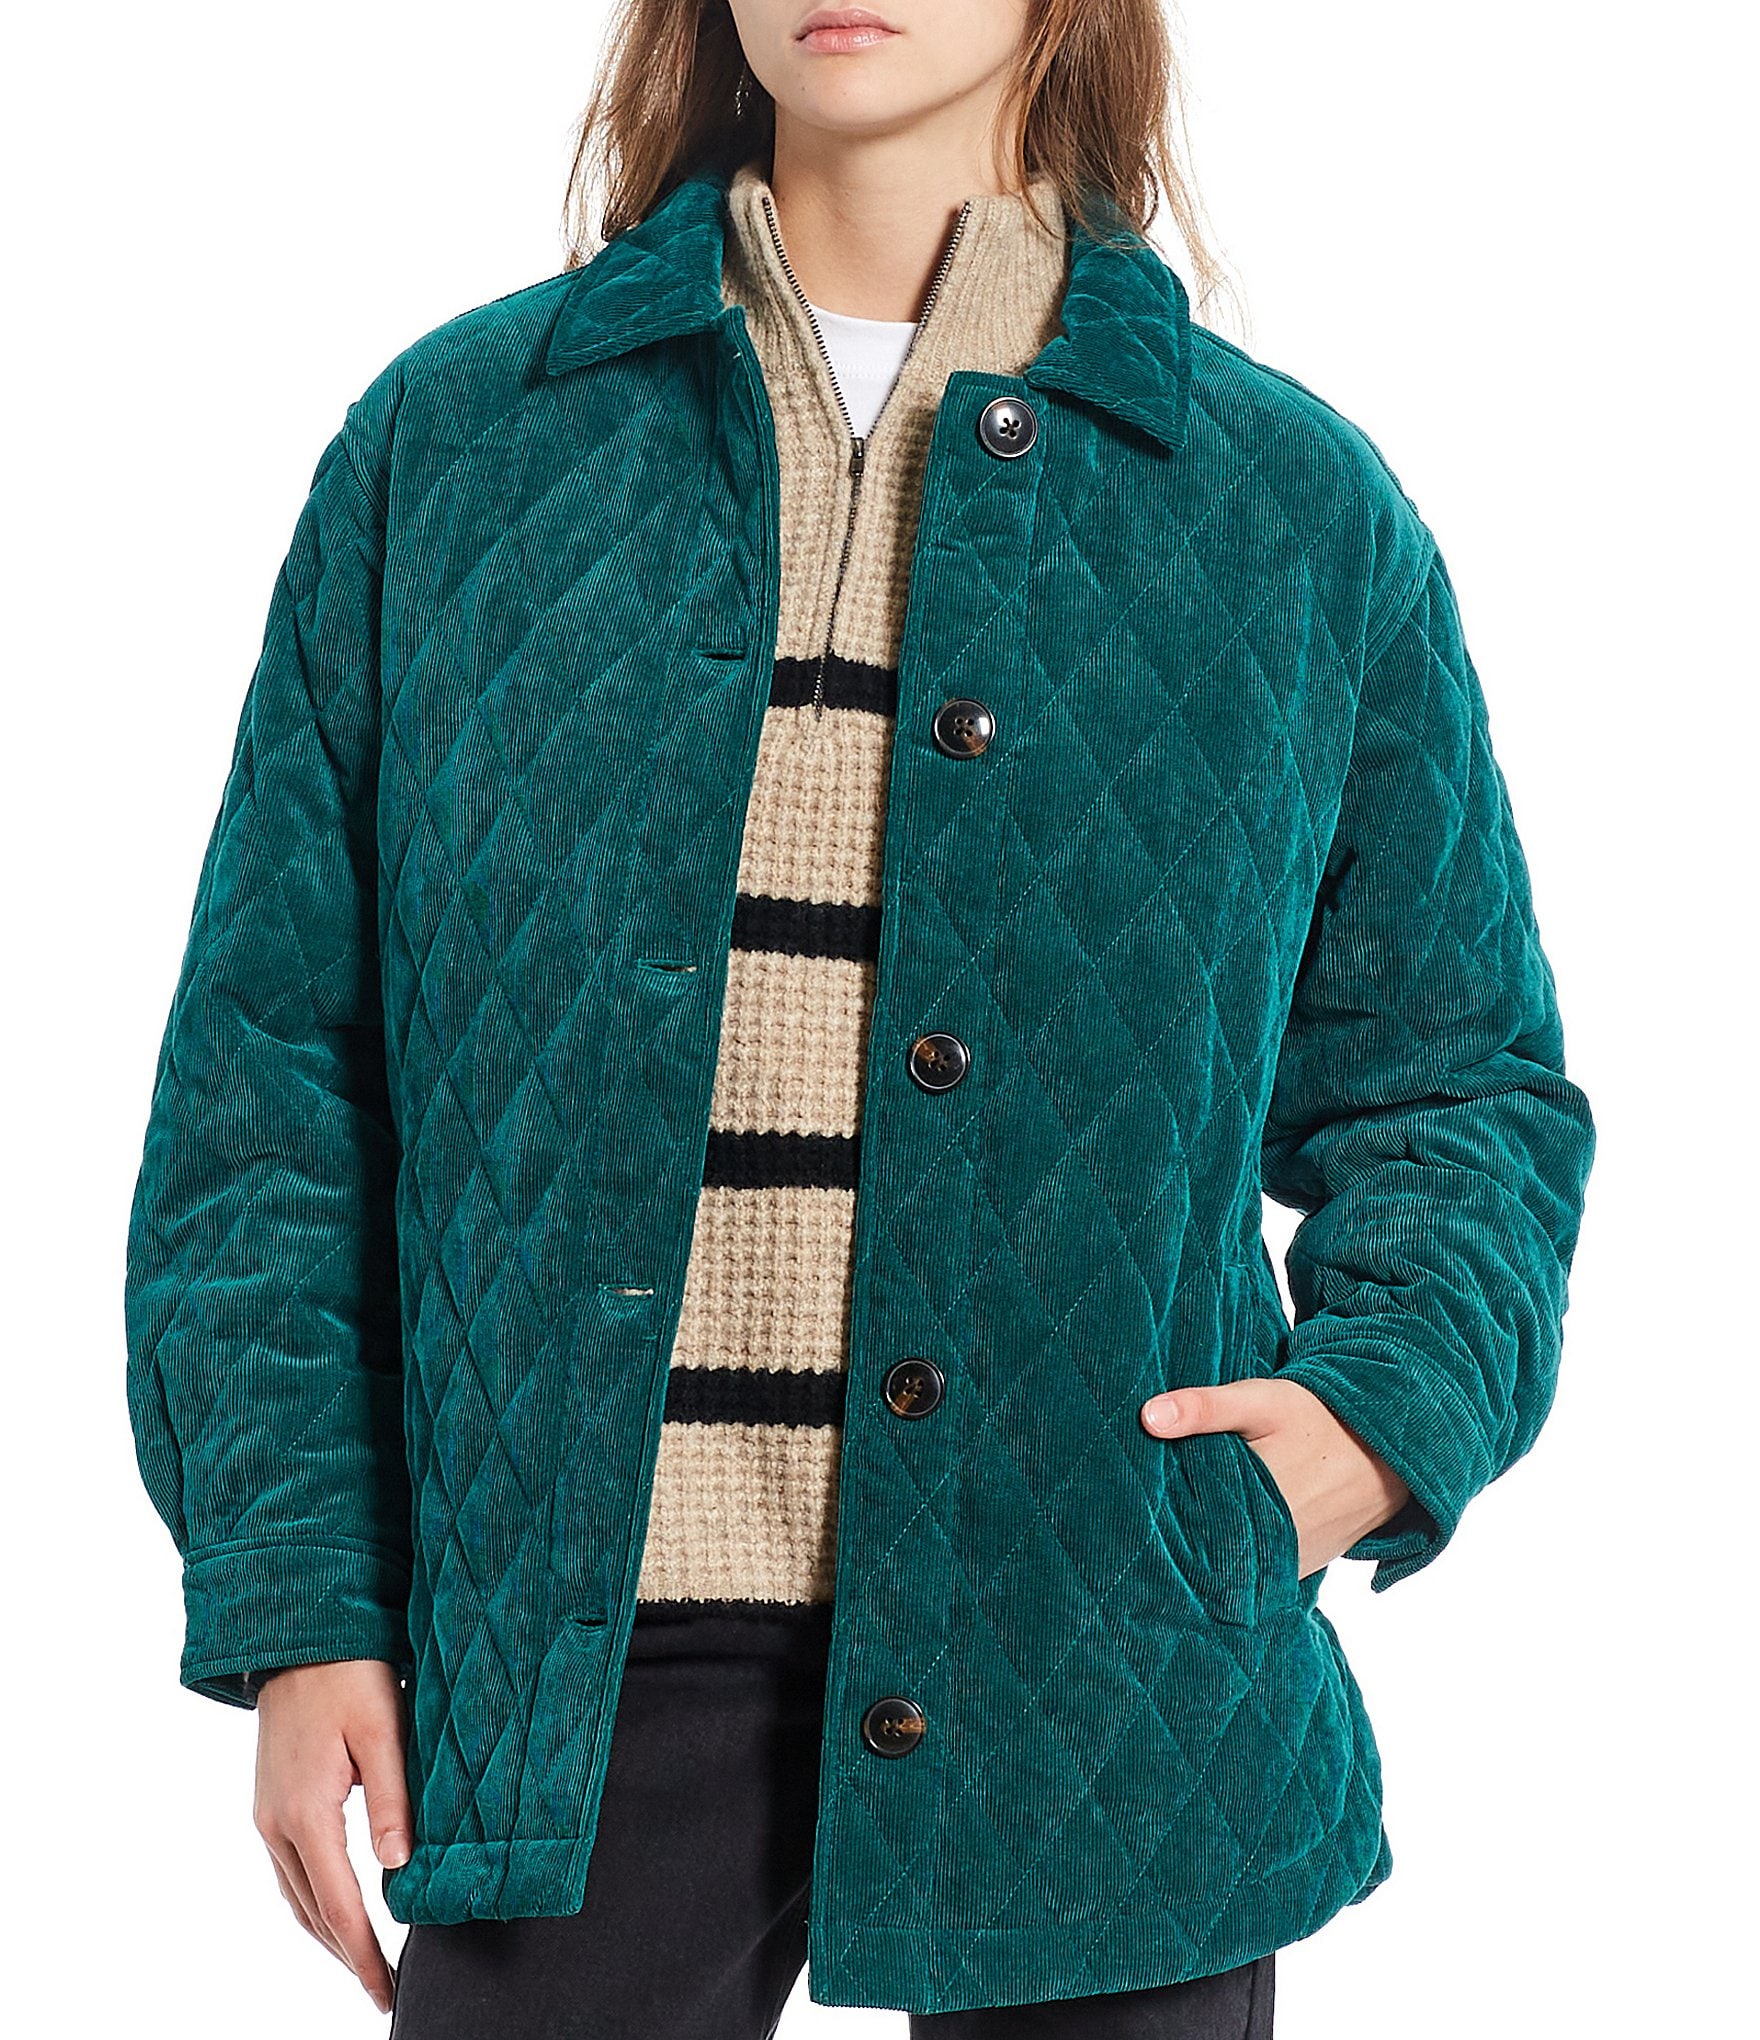 Sale & Clearance Parka Women's Coats and Jackets